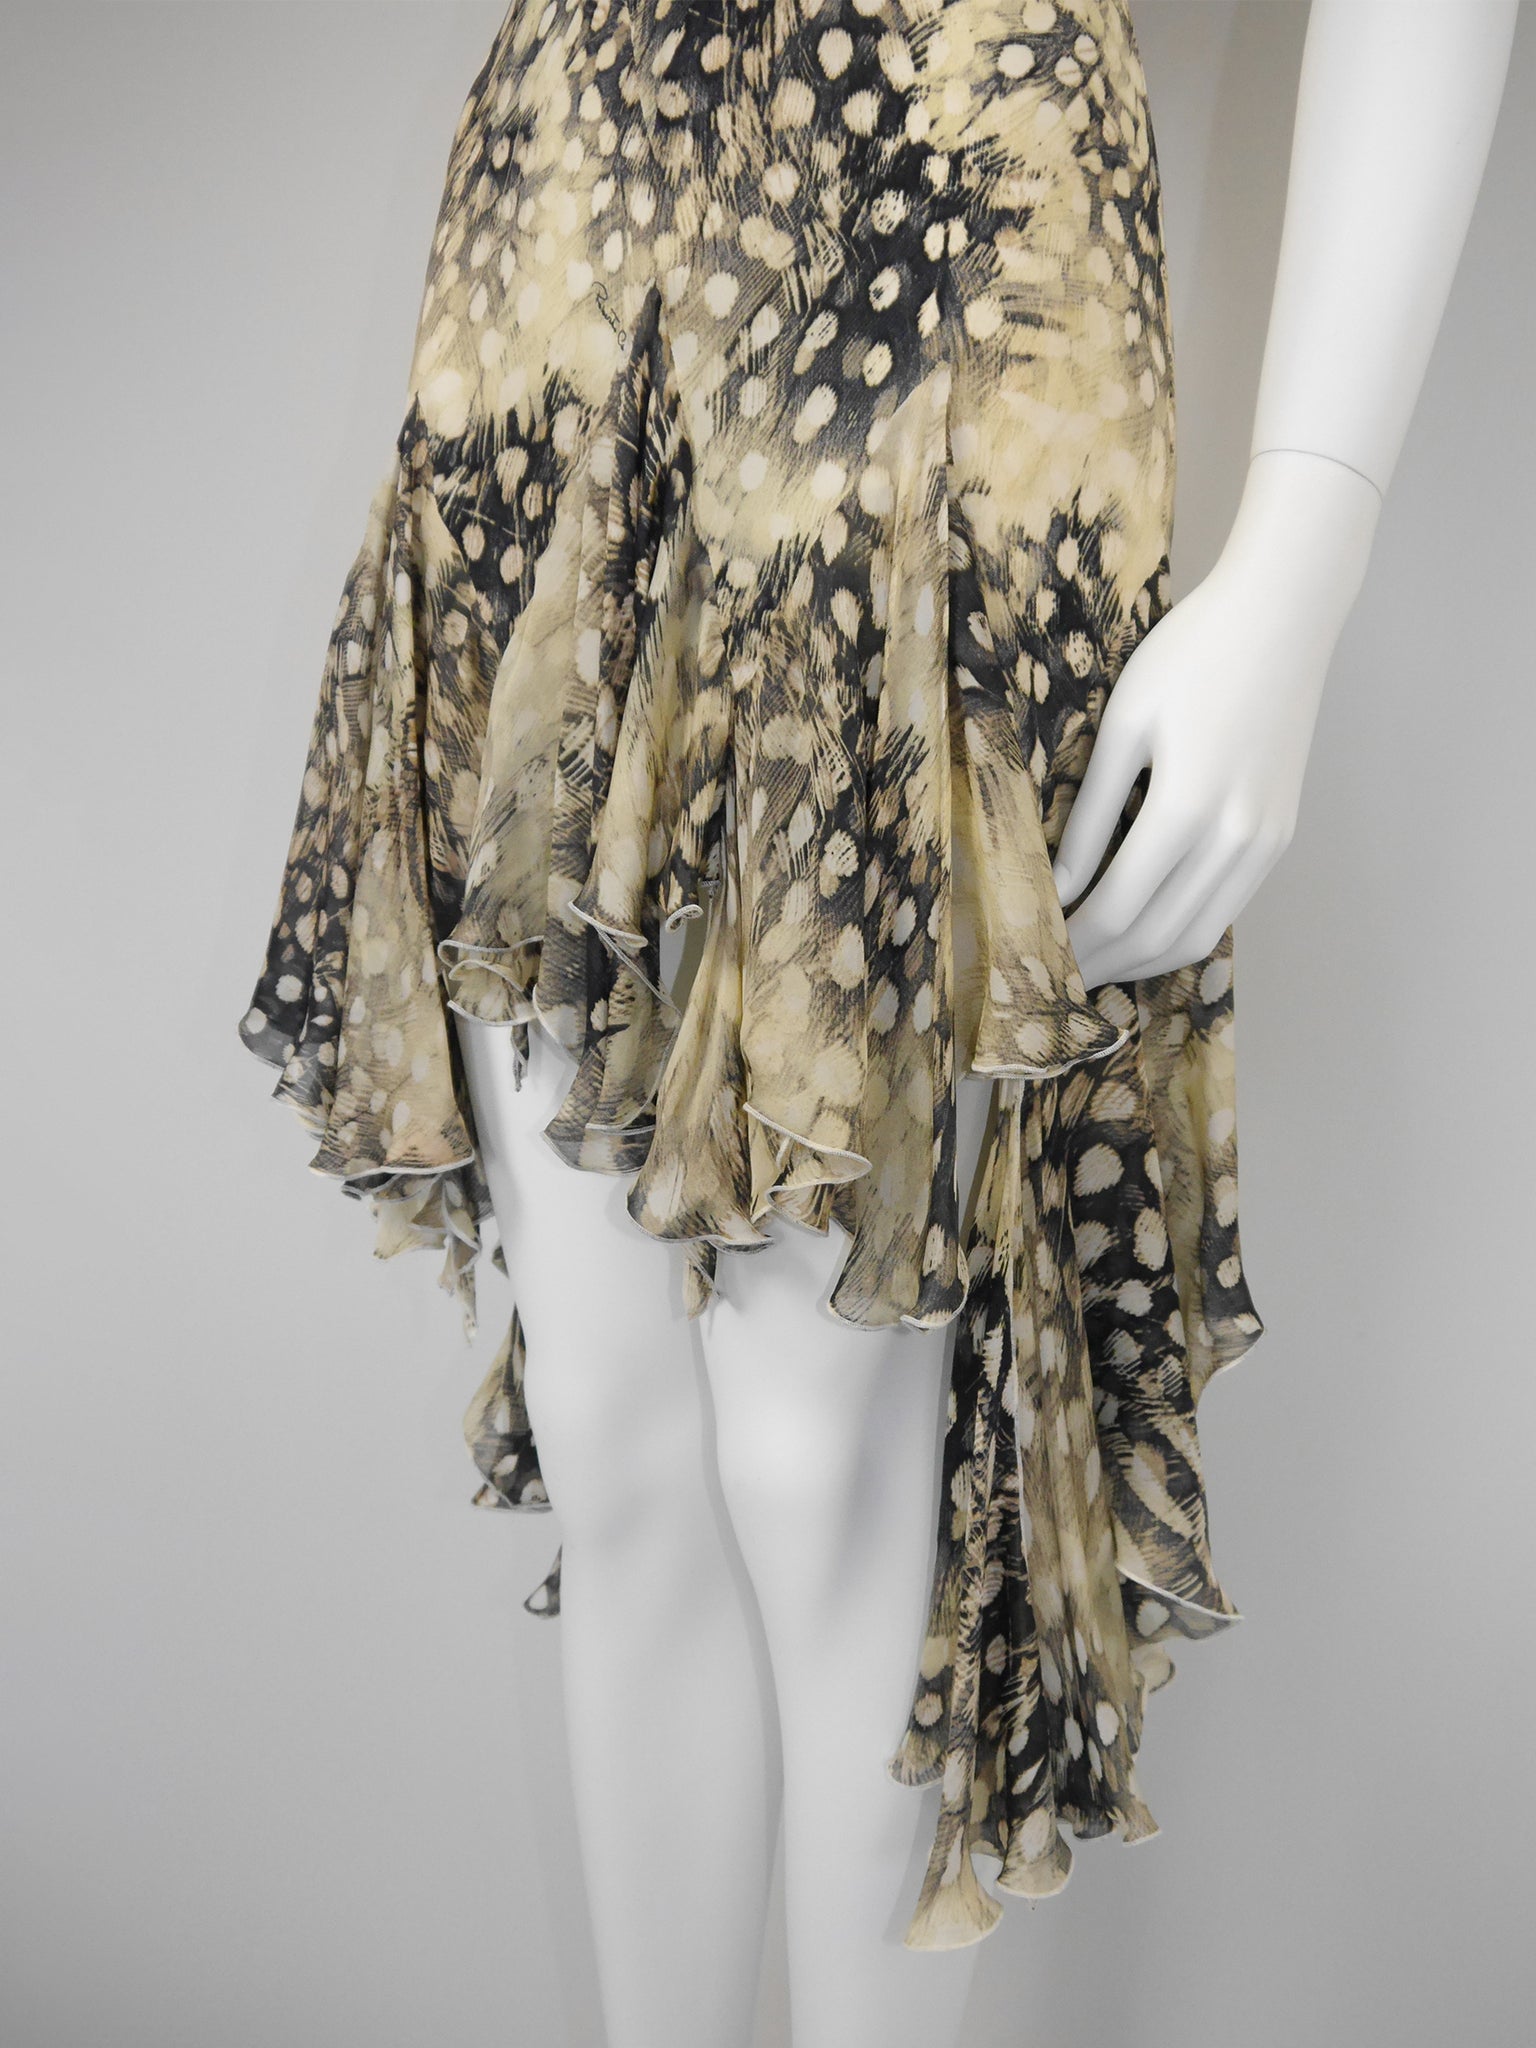 ROBERTO CAVALLI Spring 2004 Vintage Ruffled Feather Print Silk Dress Size S